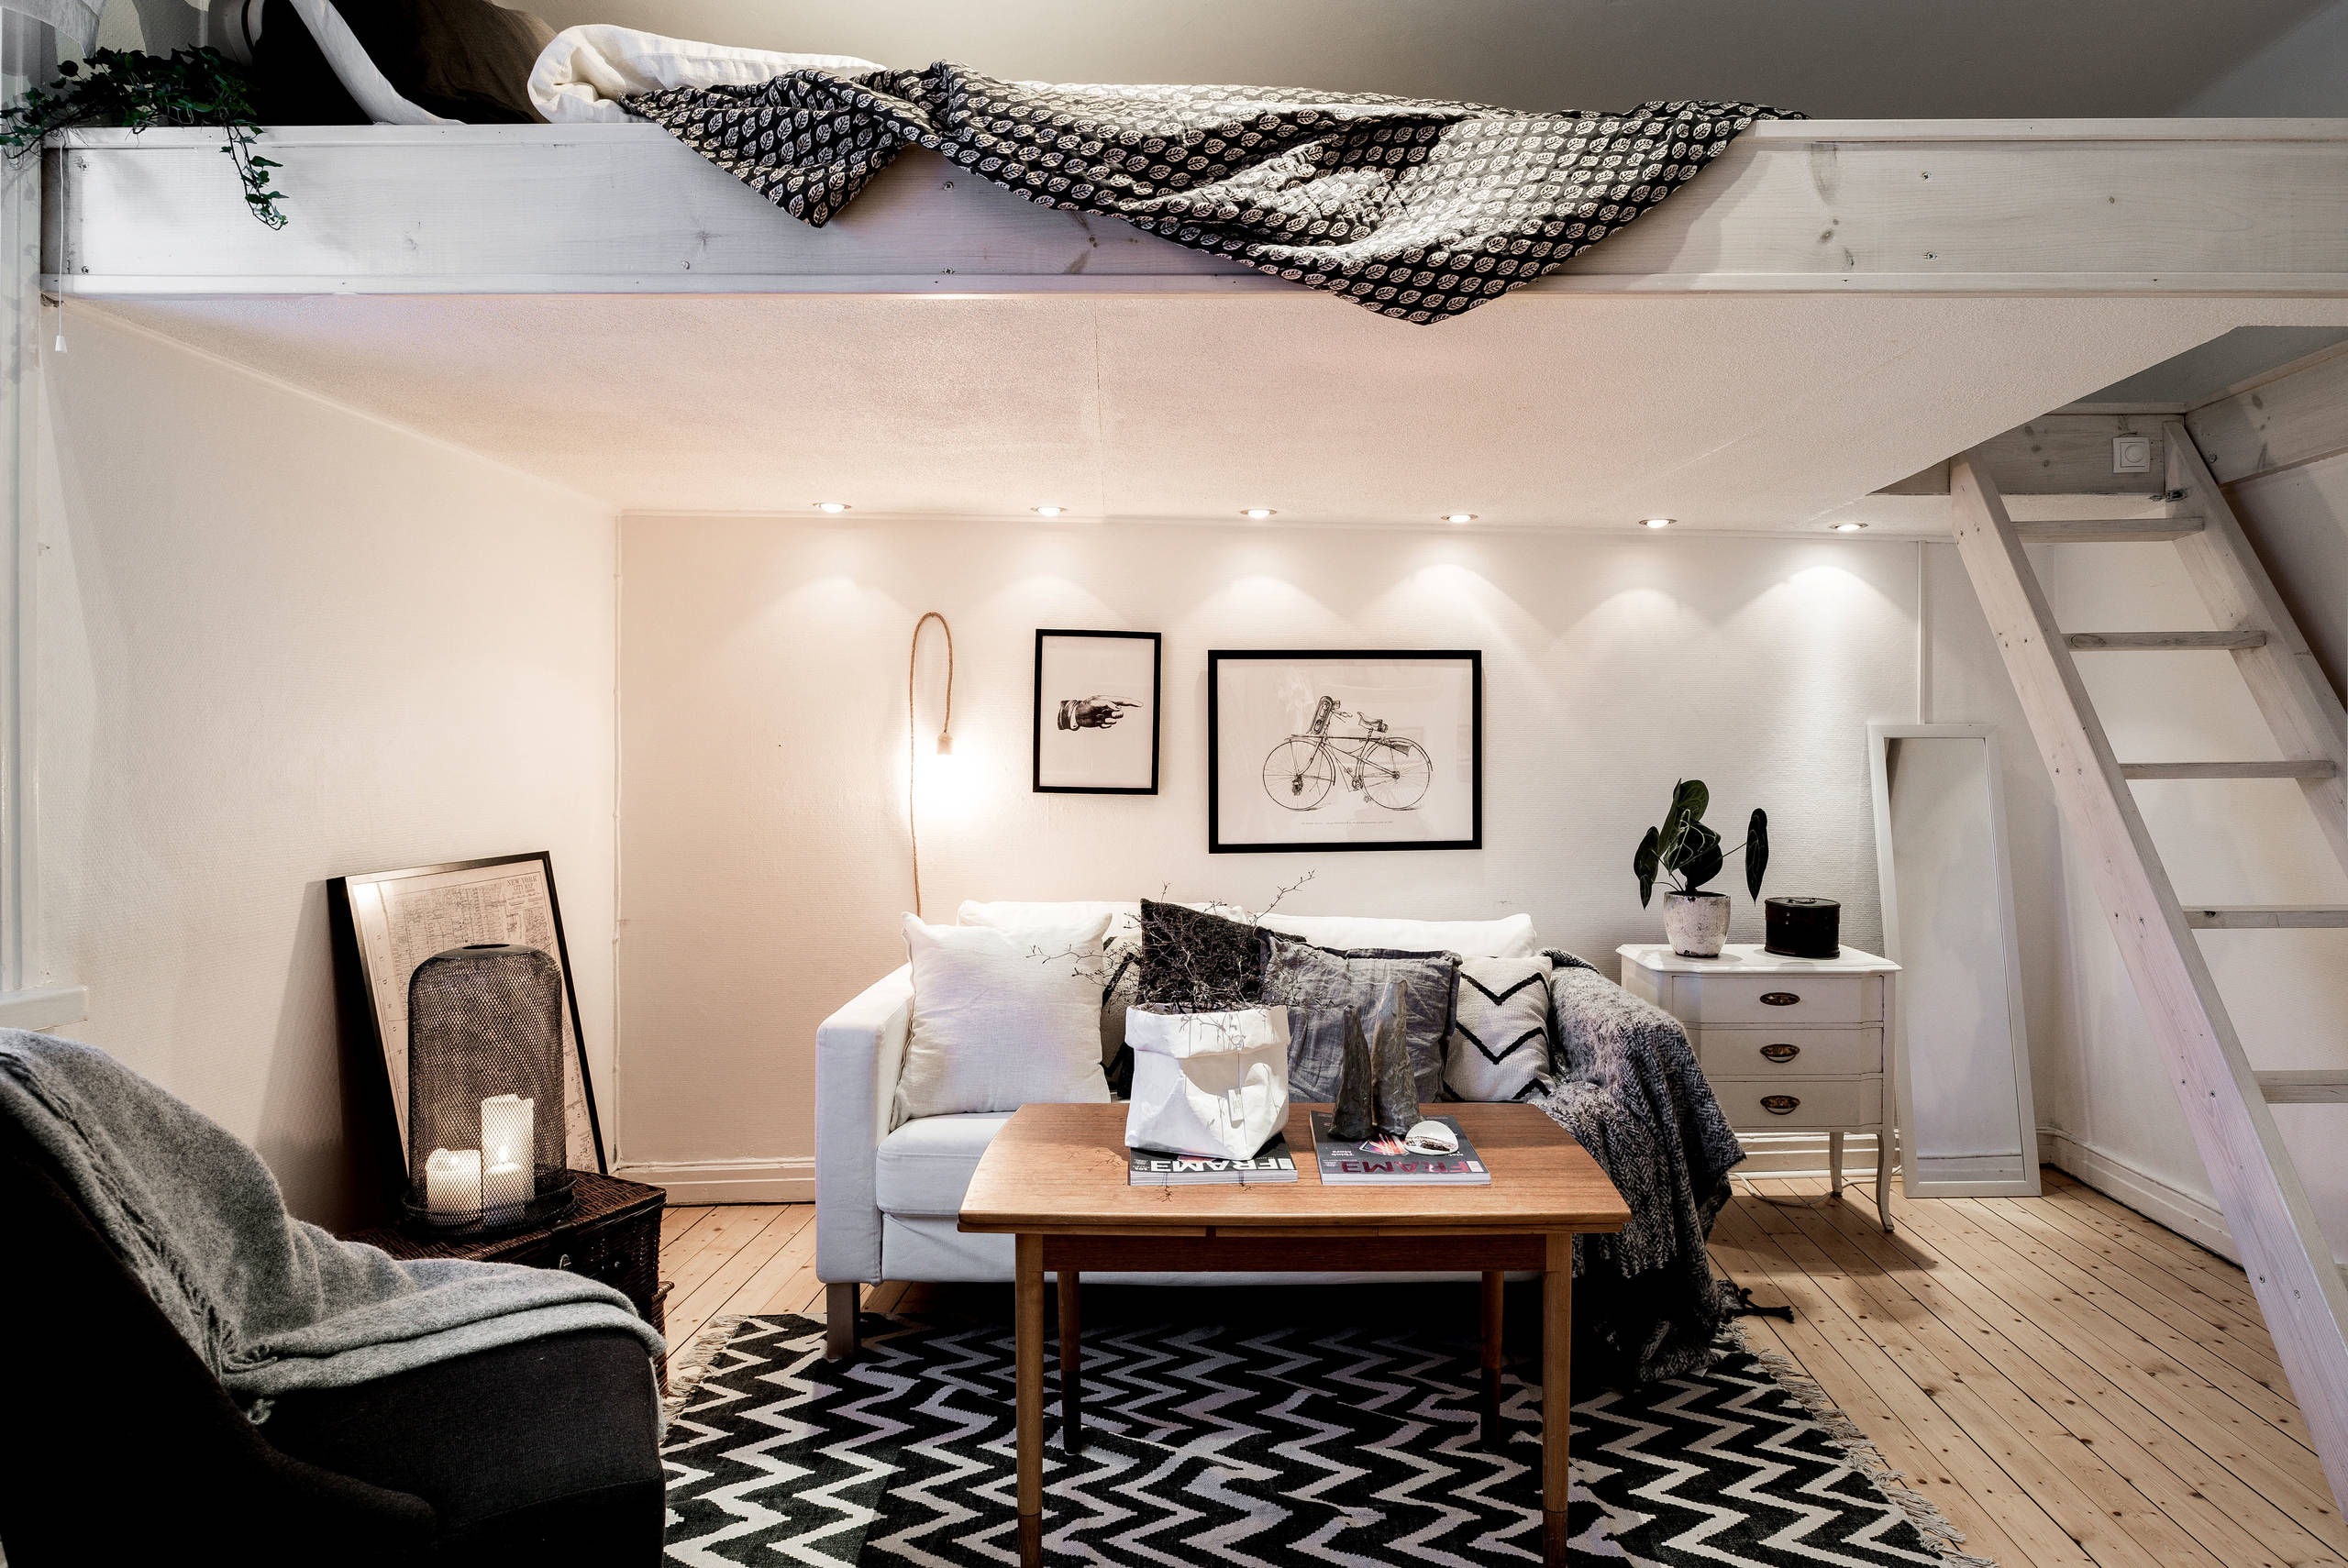 75 Beige Loft-Style Bedroom Ideas You'll Love - September, 2022 | Houzz